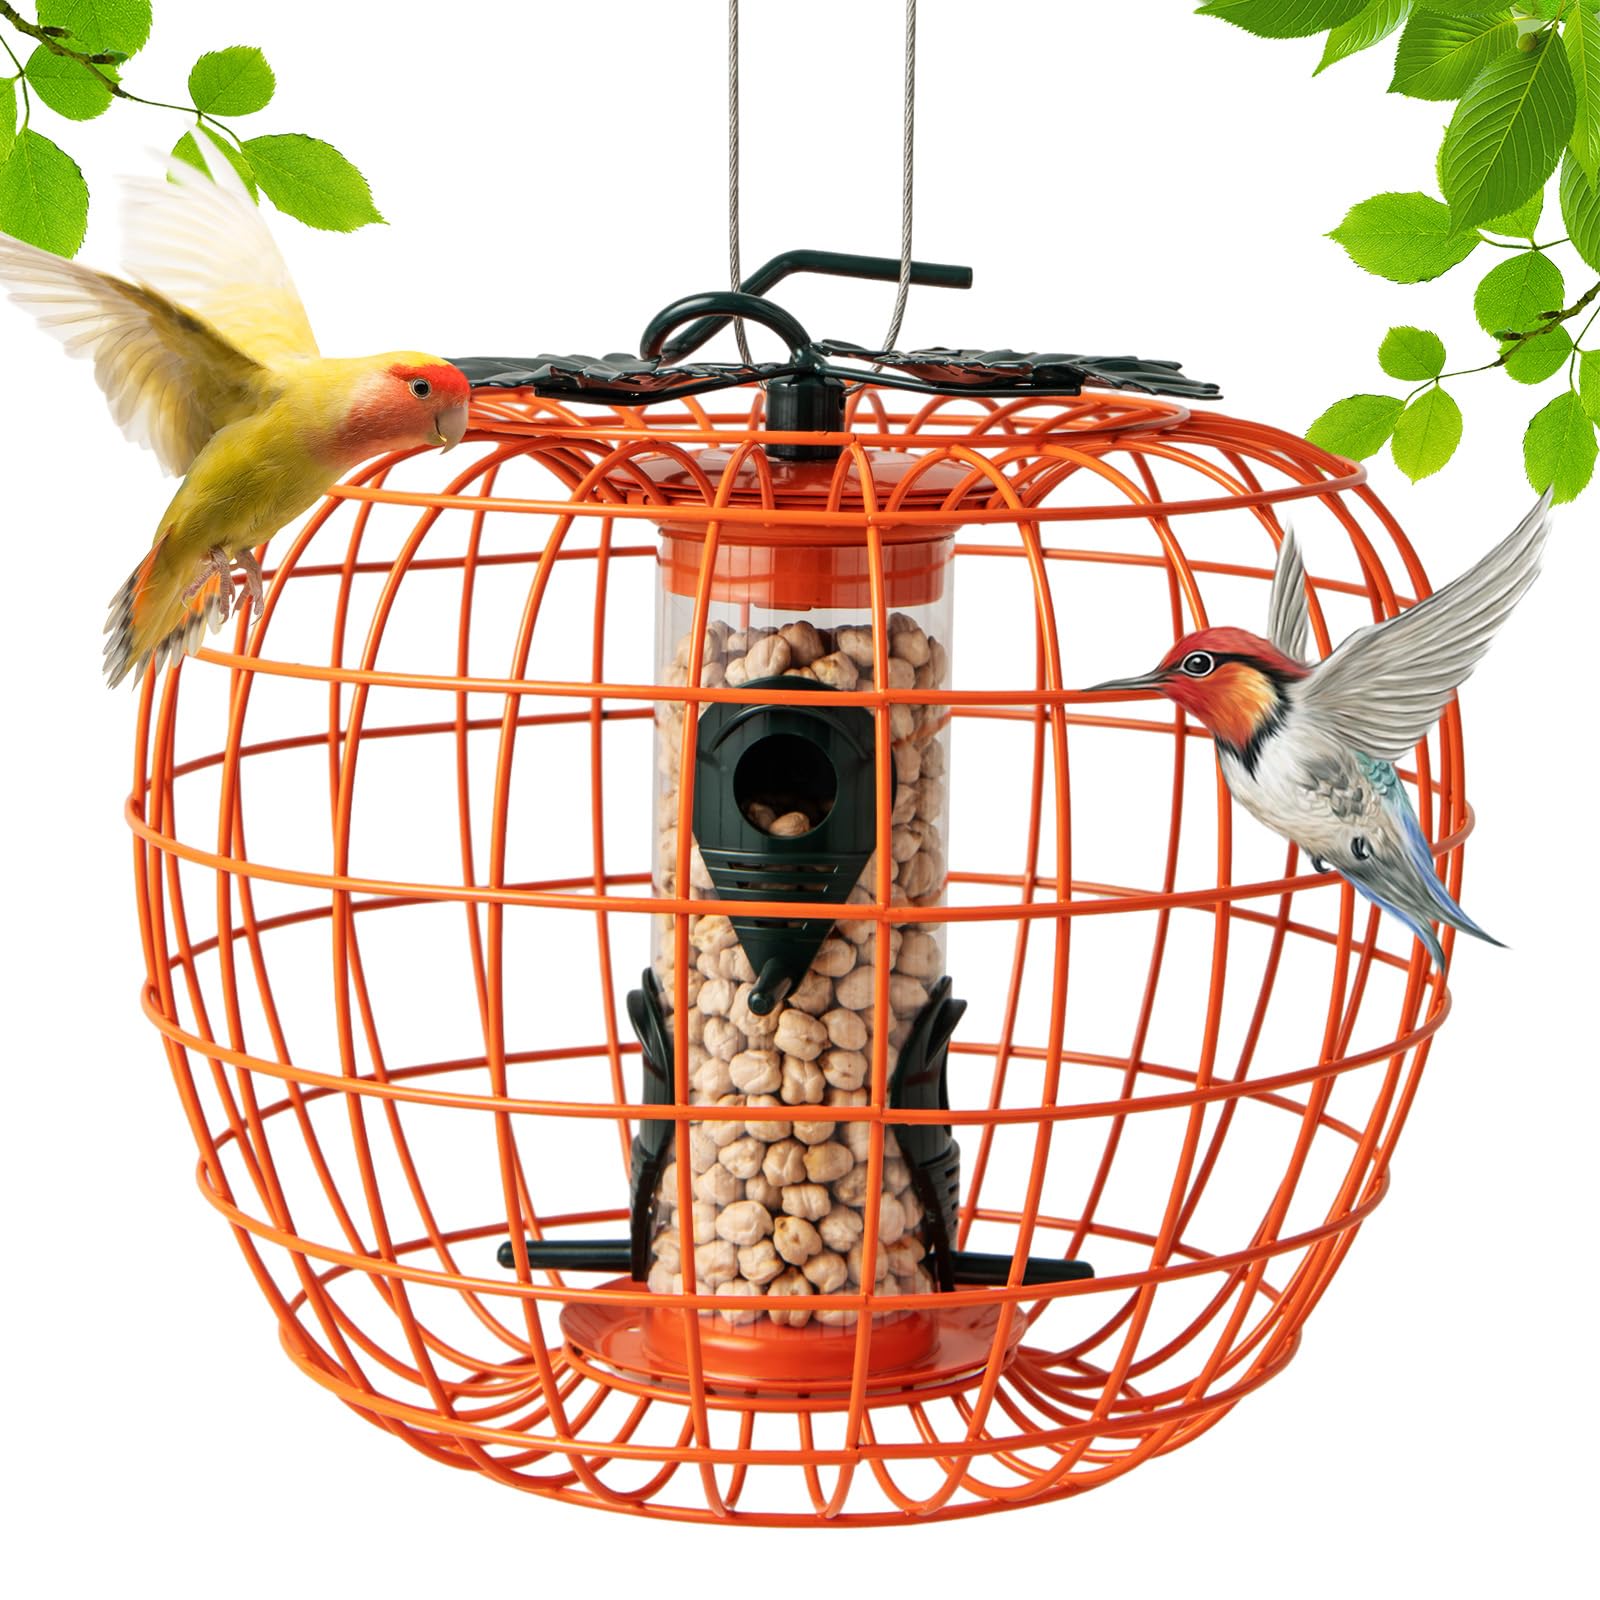 Giantex Bird Feeder, Hanging Wild Bird Feeders, Squirrel Proof Metal Frame, 4 Ports, 360° Feeding